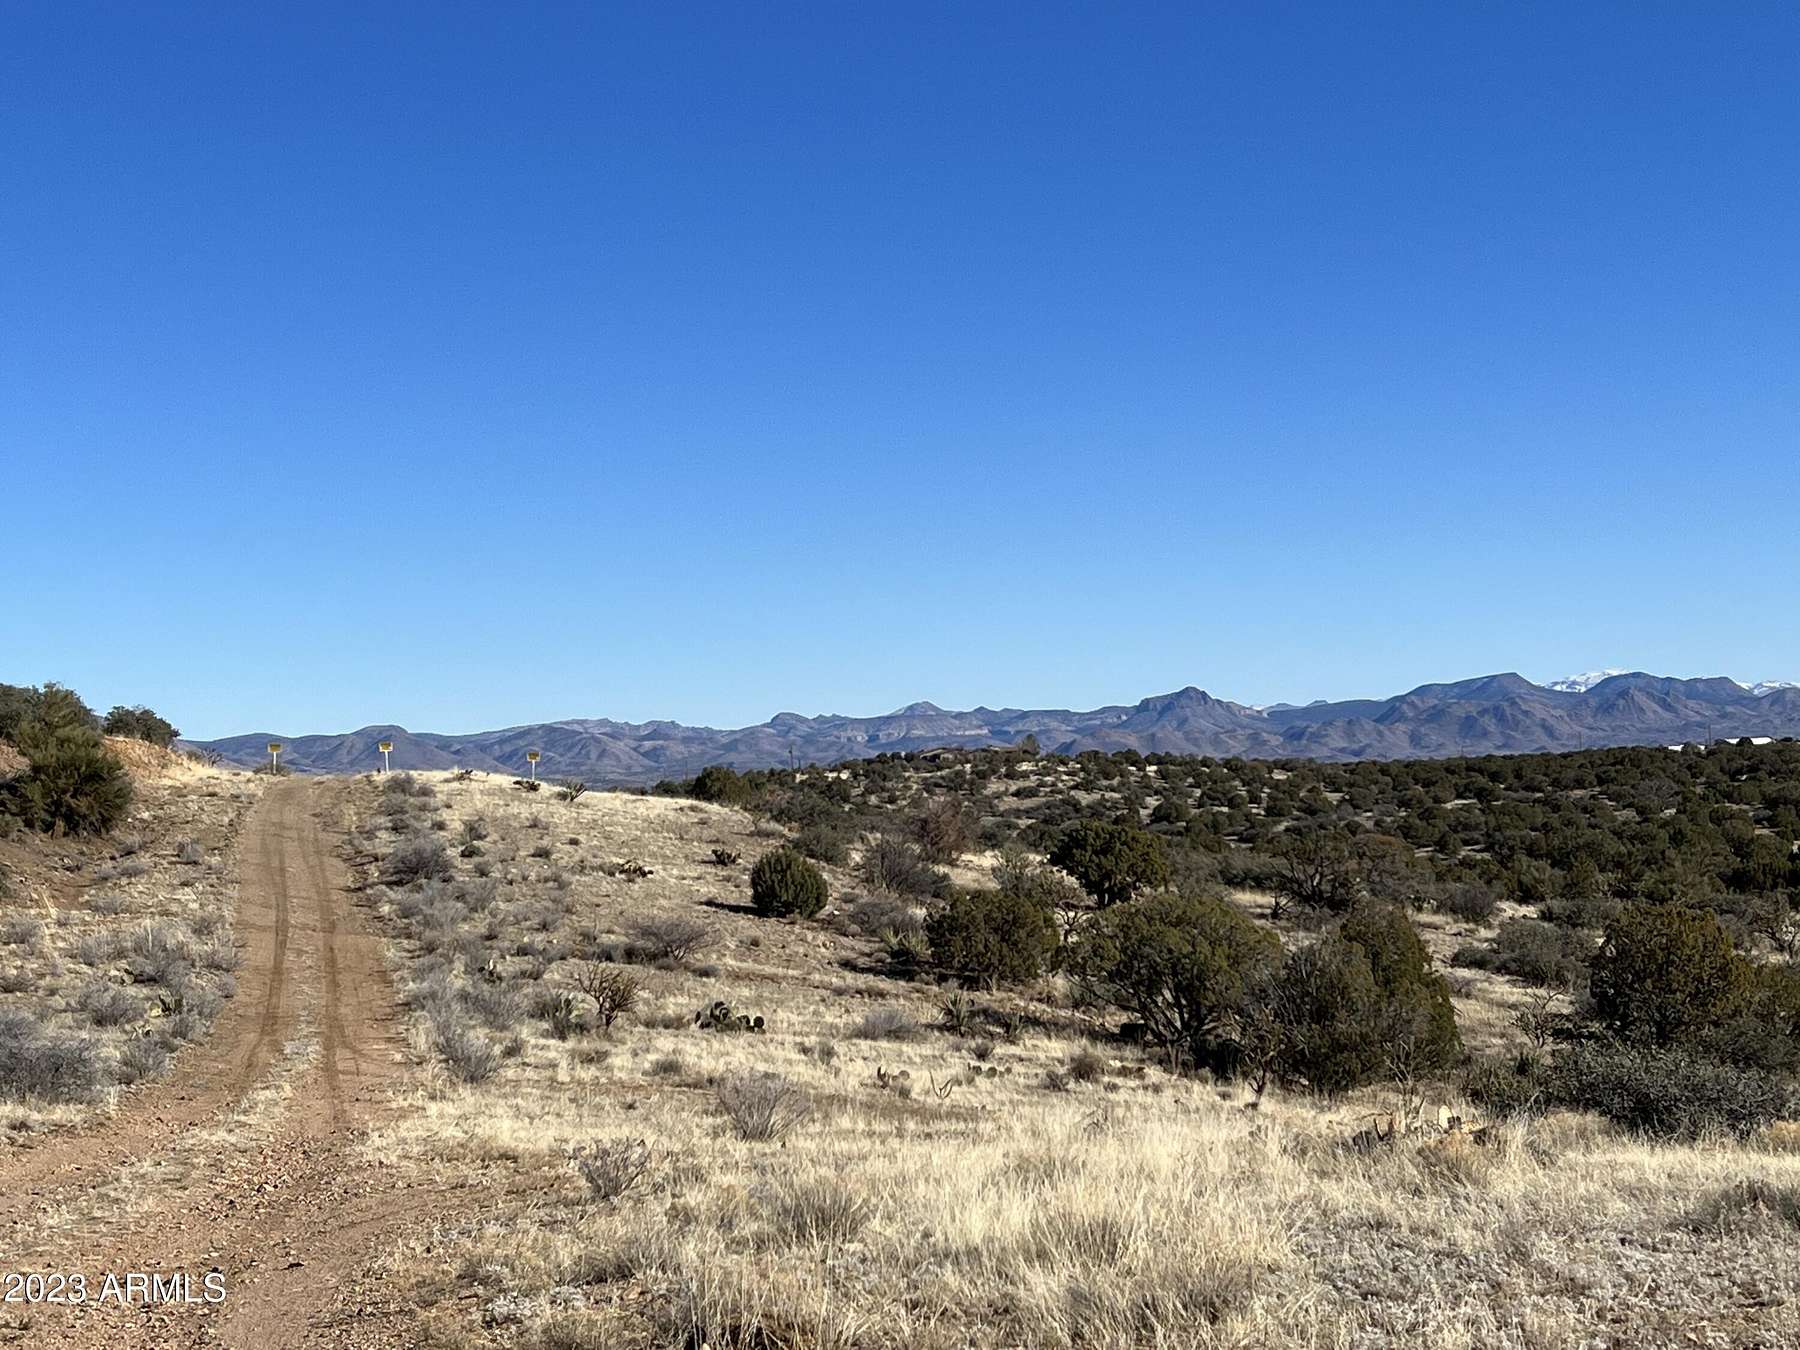 39.6 Acres of Land for Sale in Kingman, Arizona